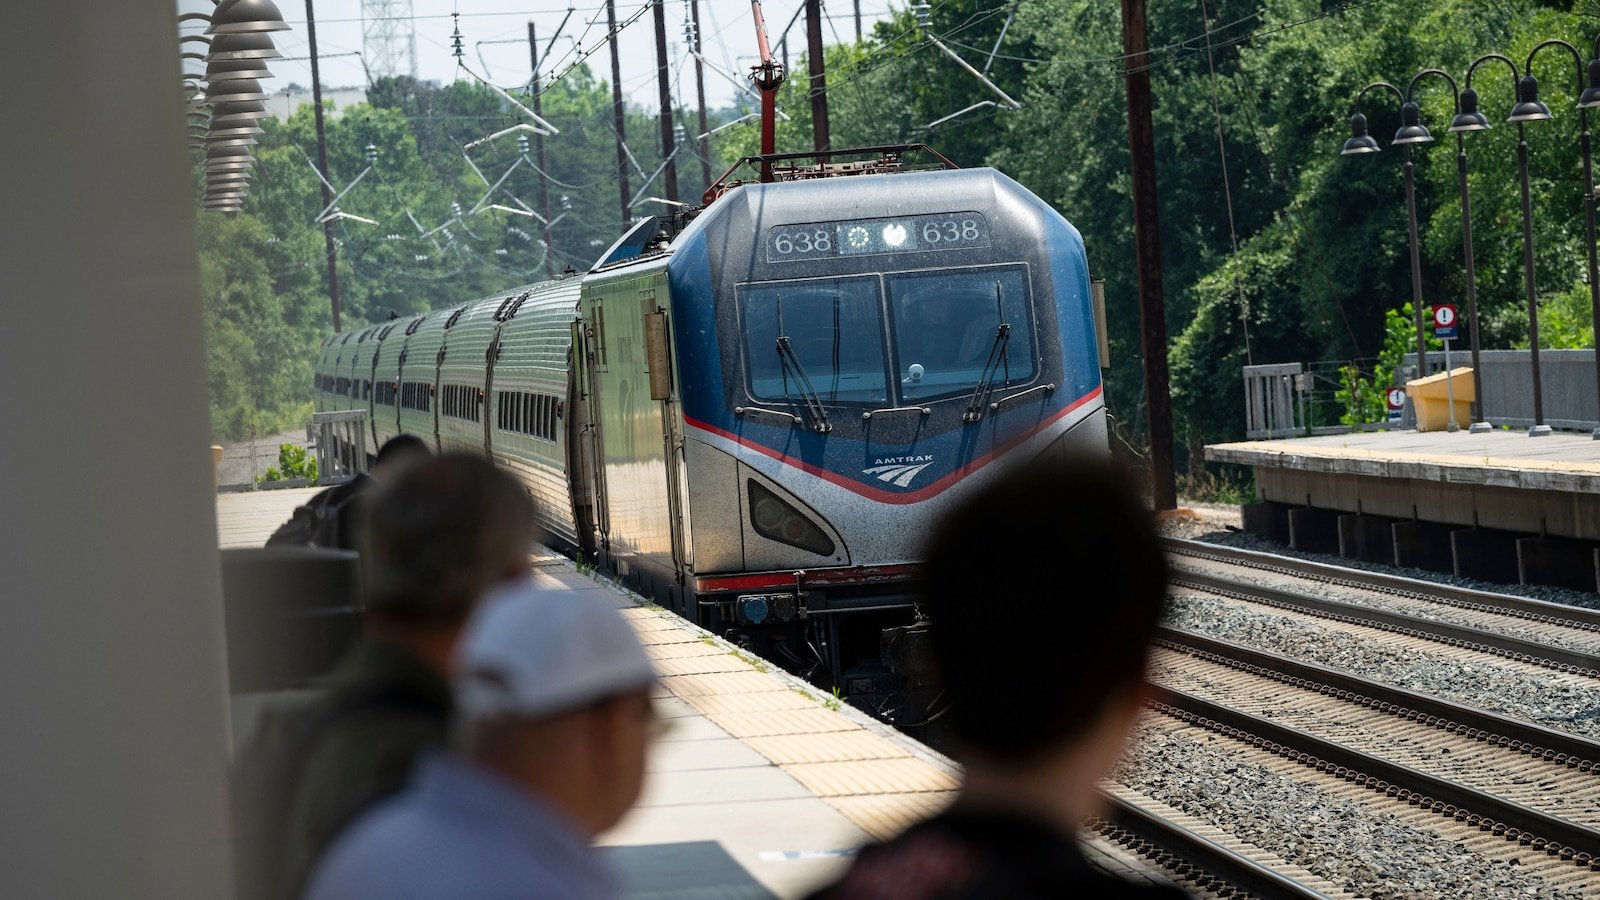 Amtrak service suspended between Philadelphia, Connecticut